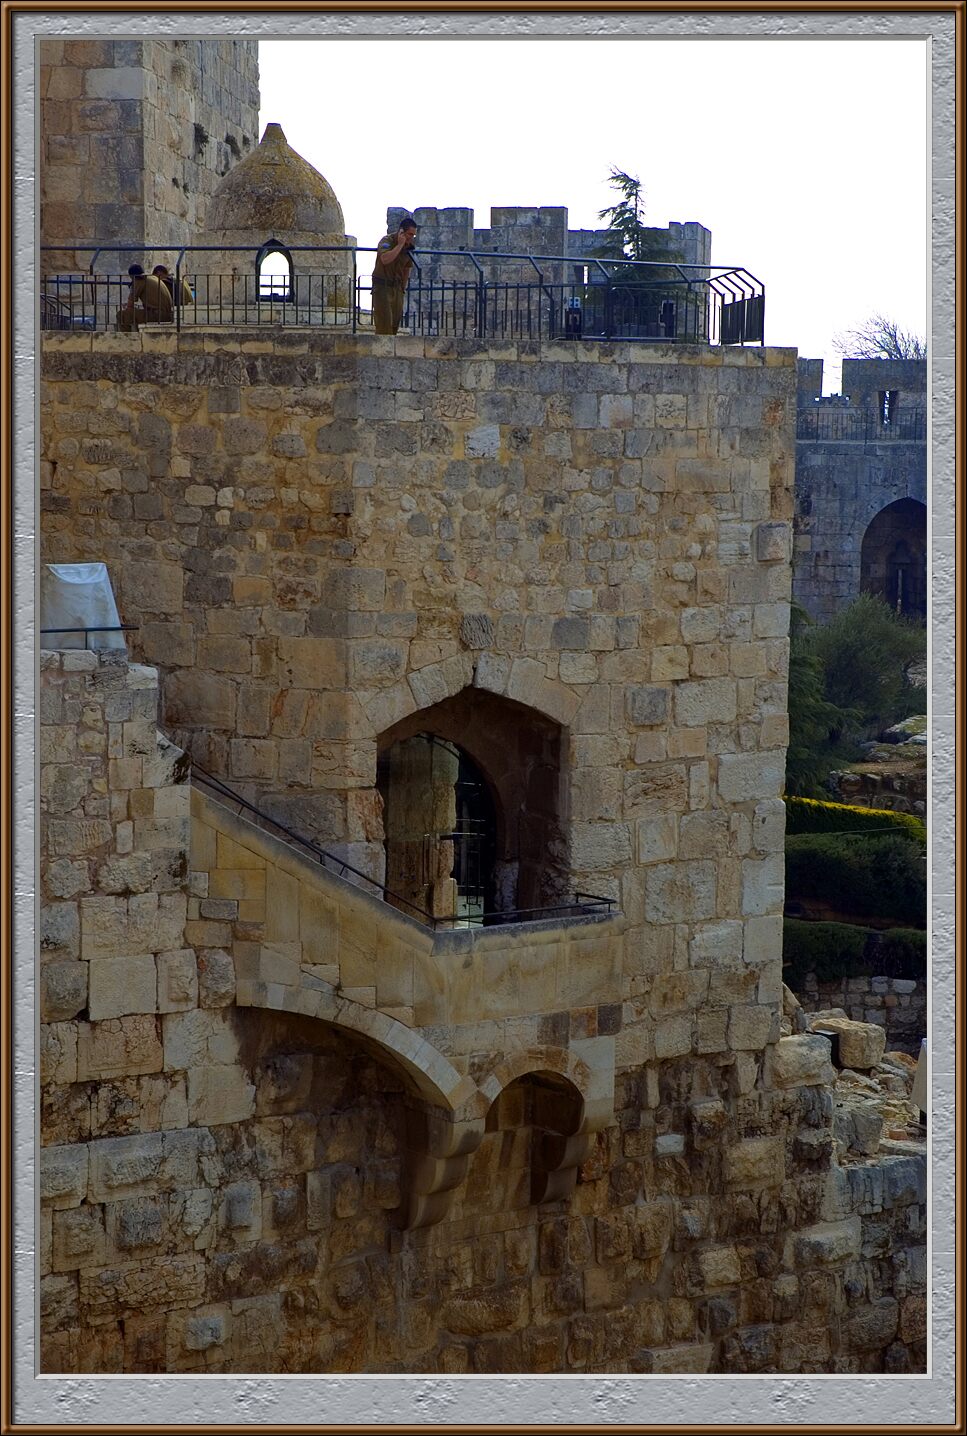 Tower of King David museum